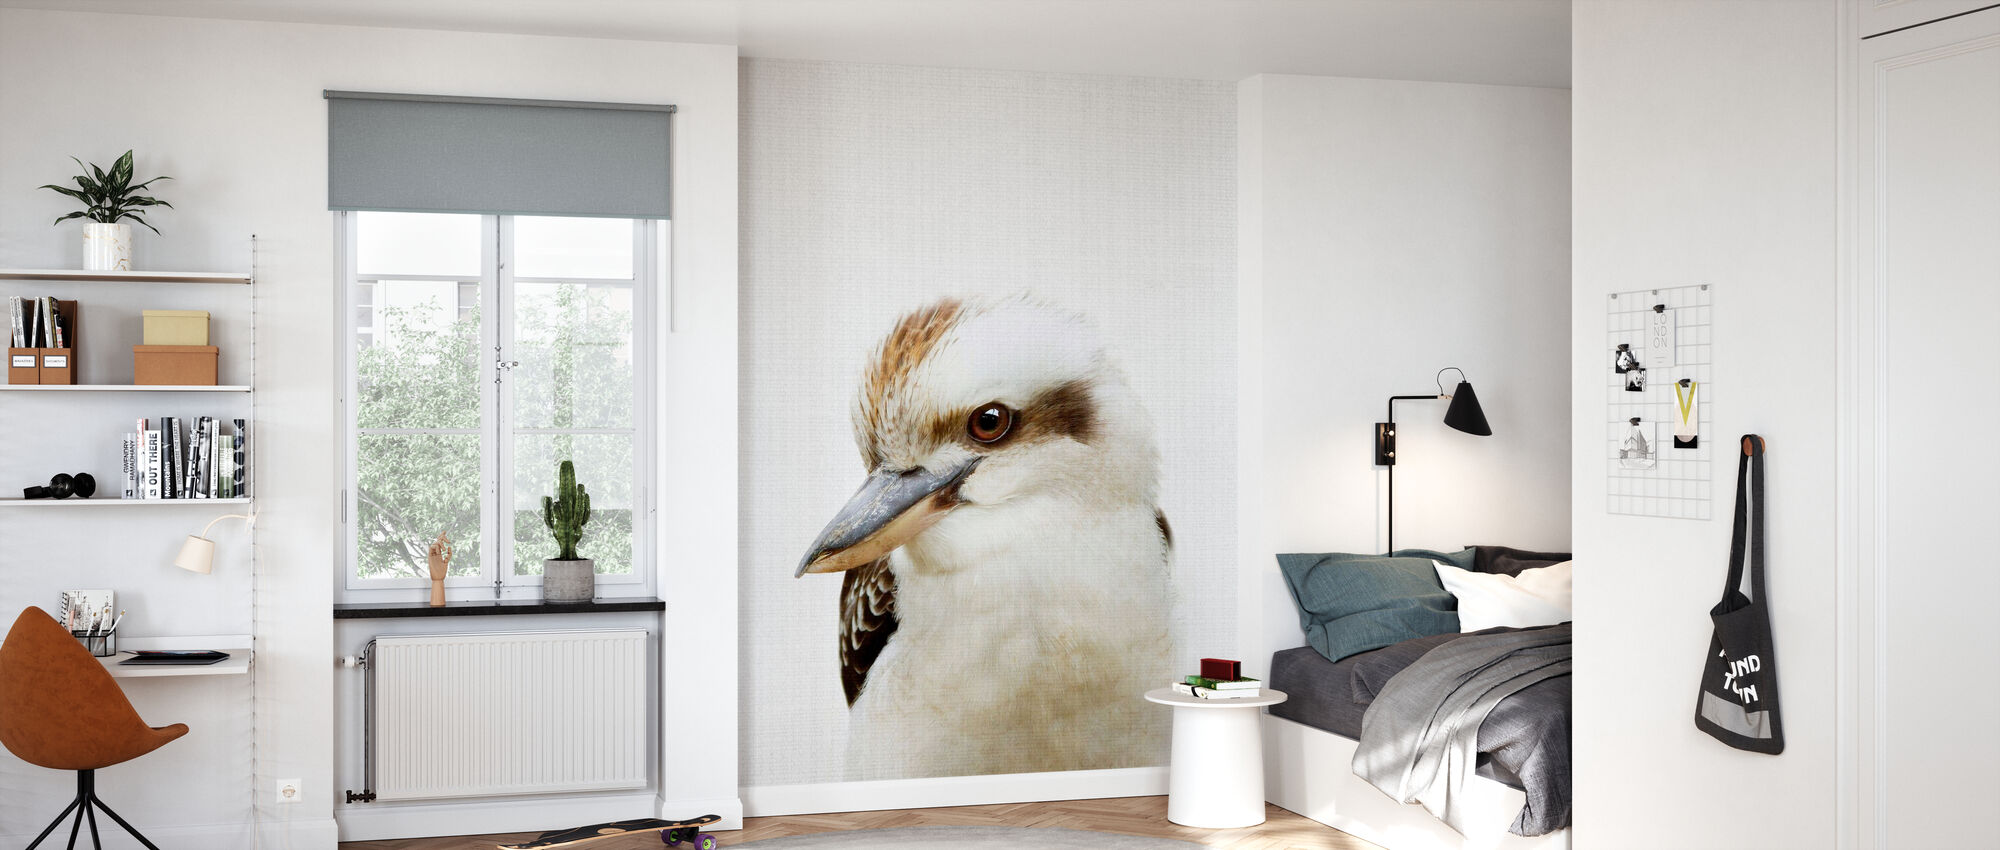 Kookaburra Wallpapers